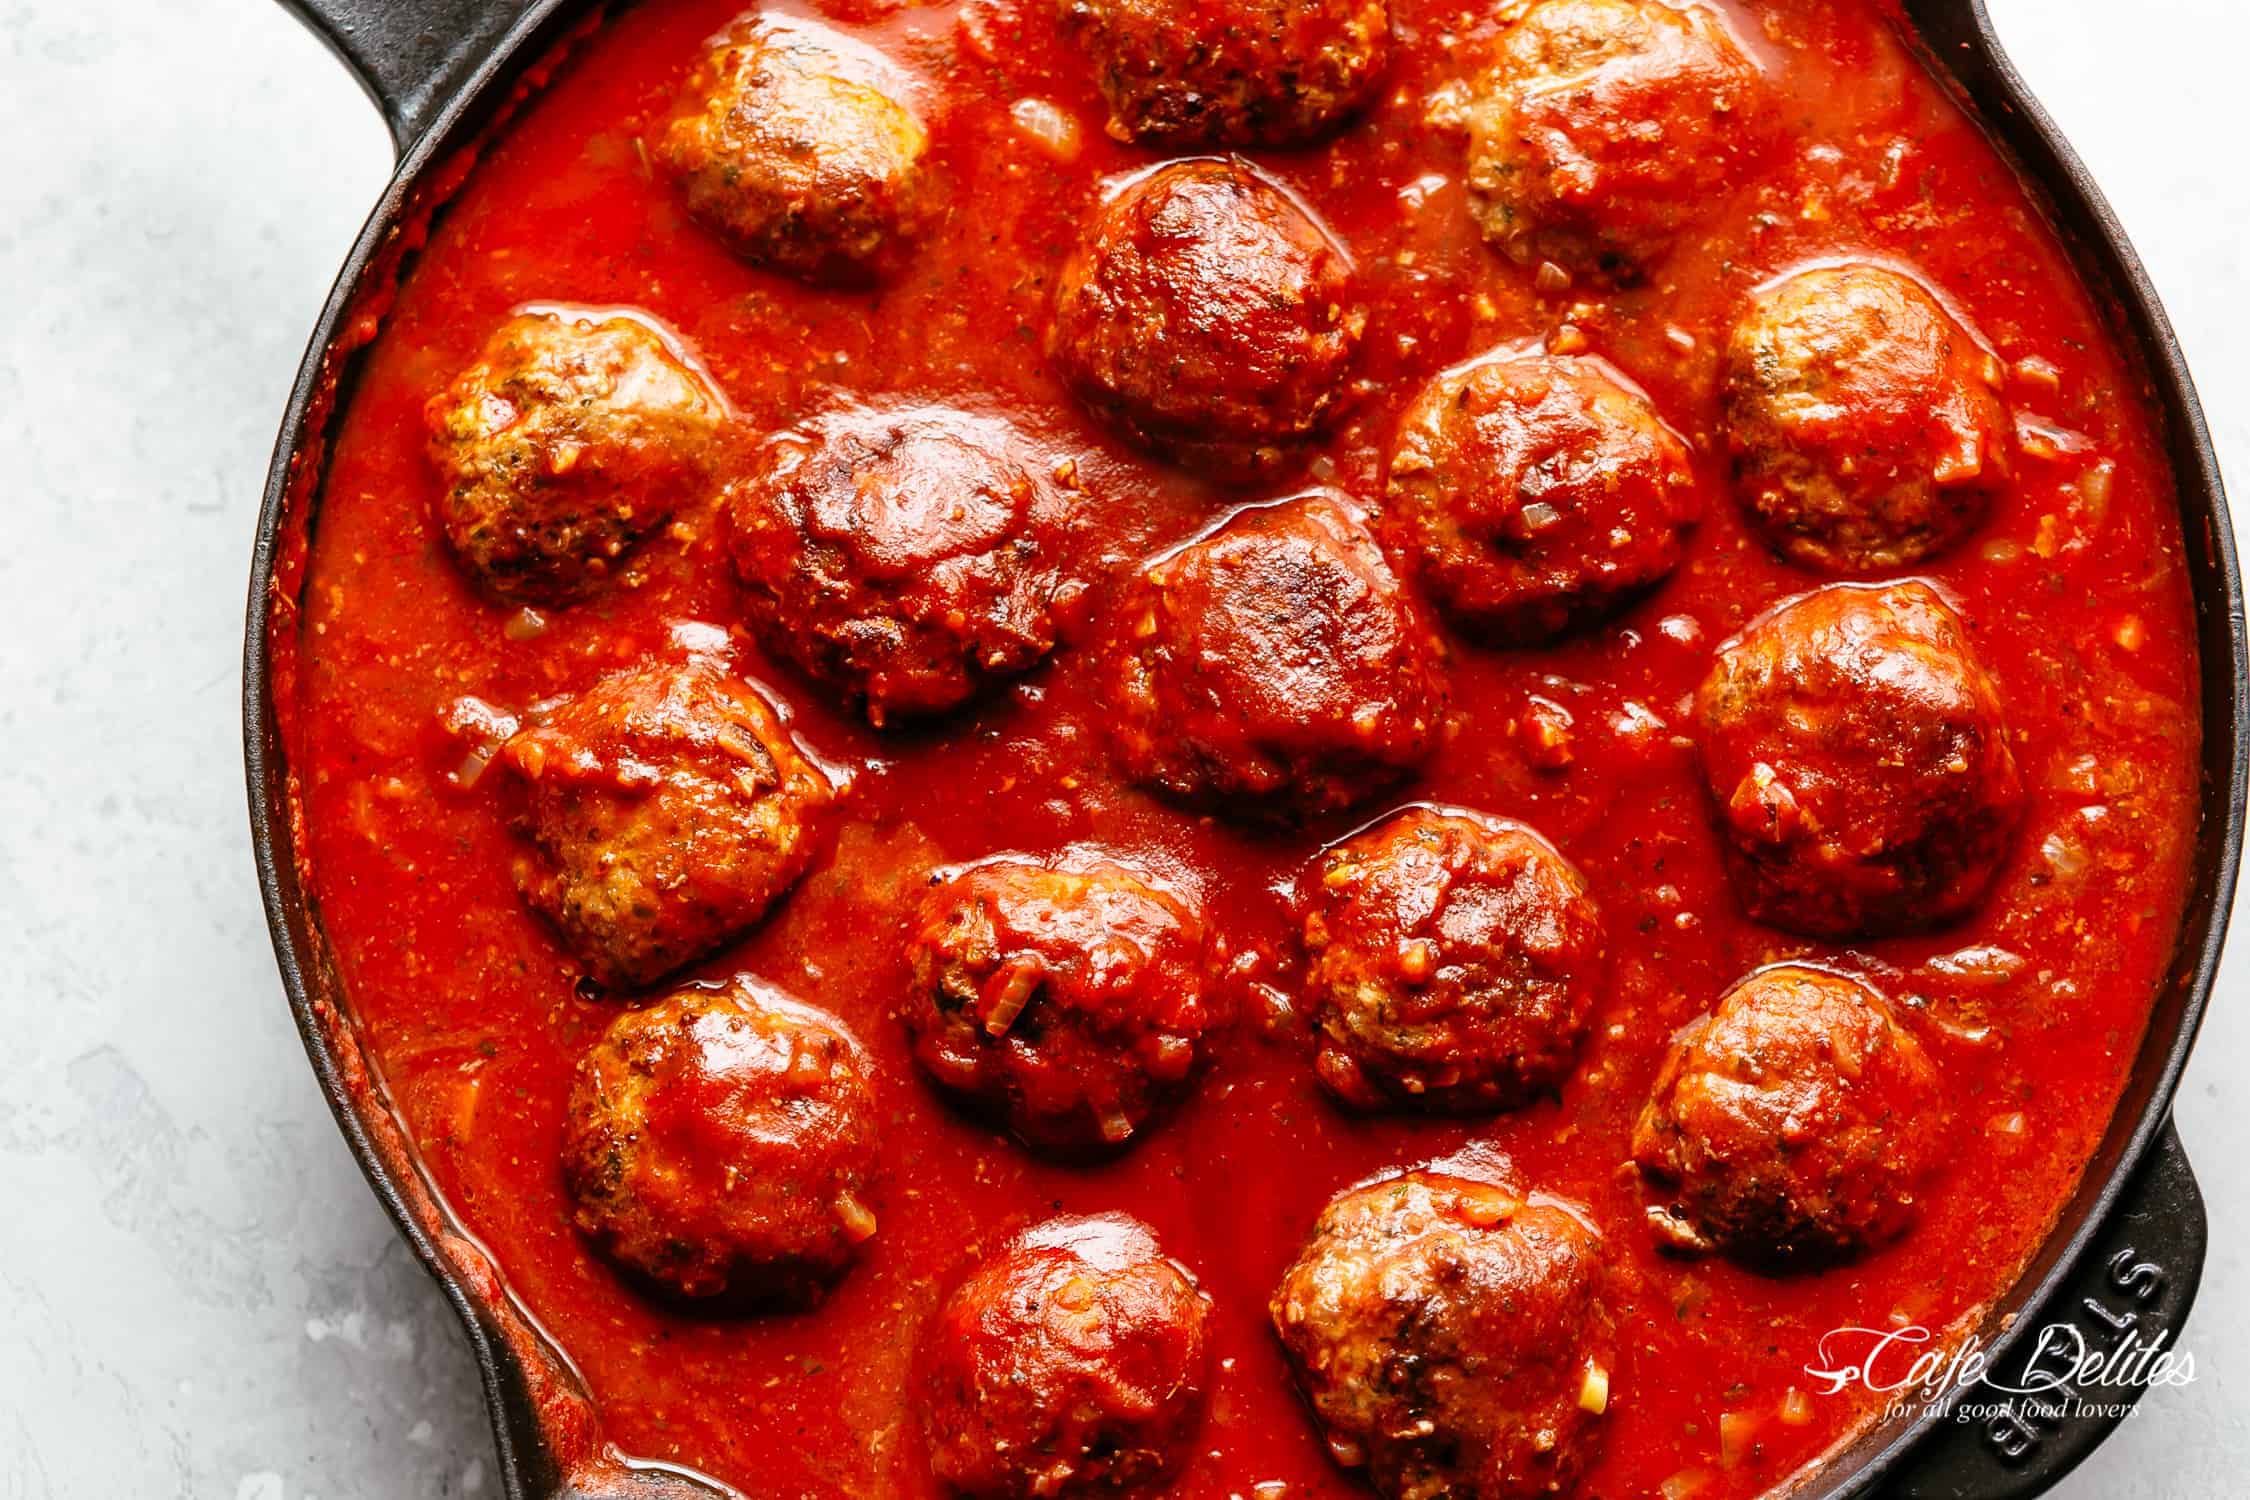 Meatballs in sauce for spaghetti!